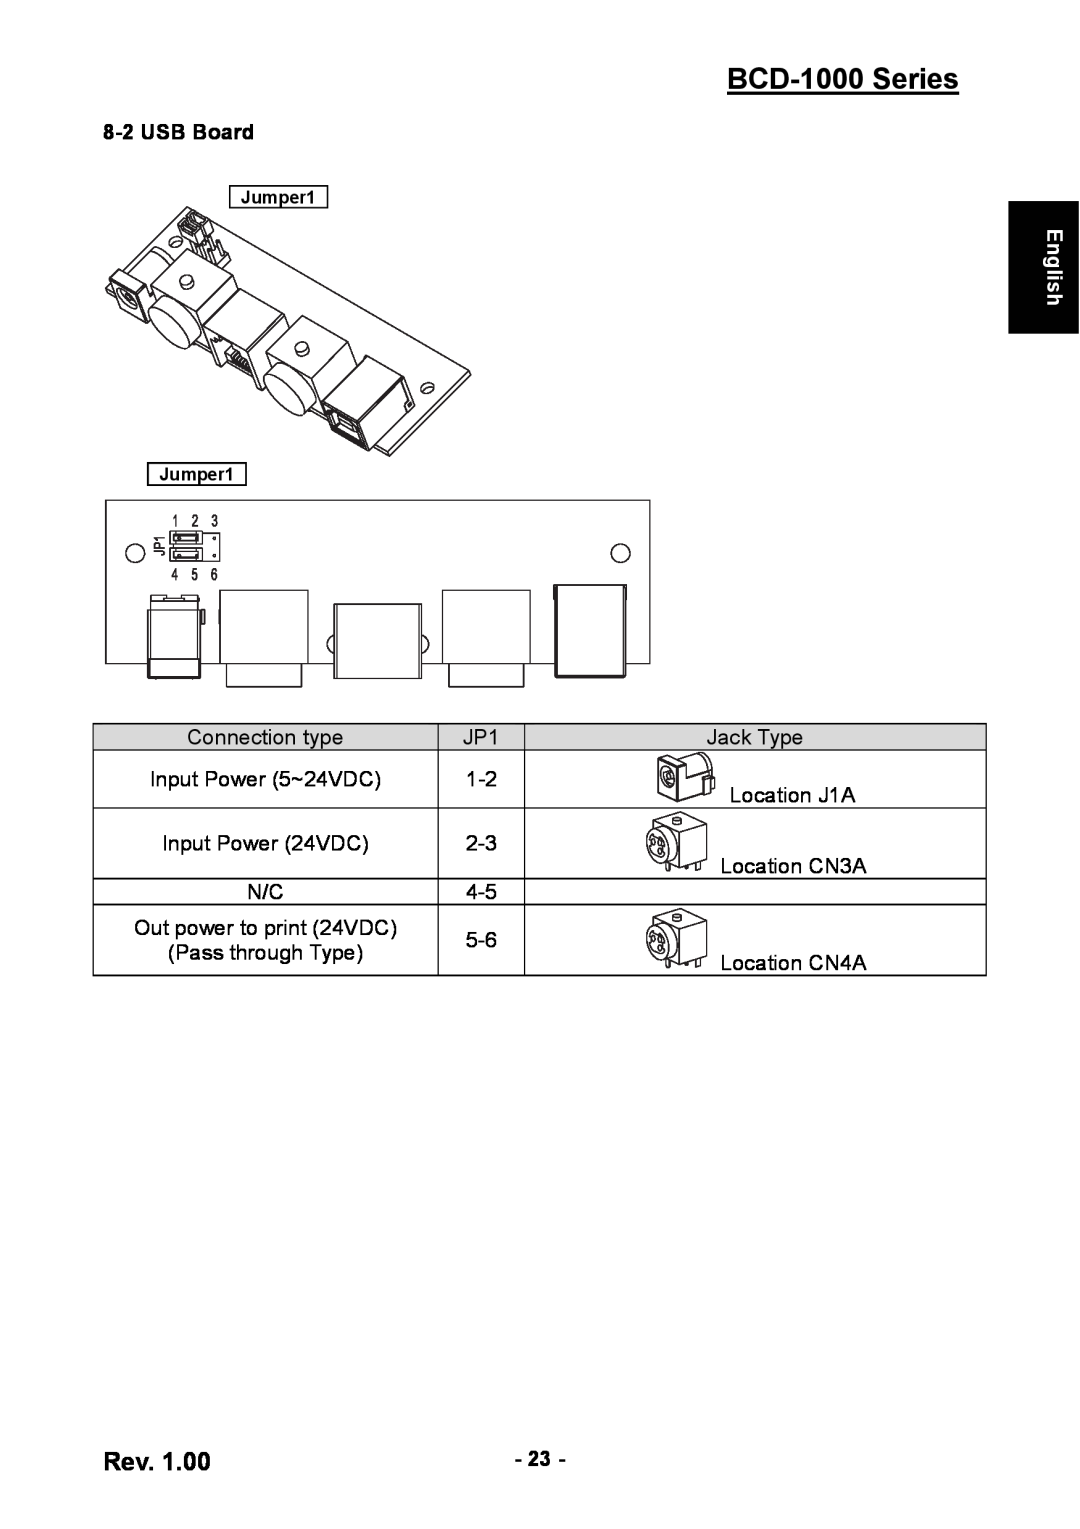 Samsung user manual USB Board, BCD-1000 Series, English, Jumper1 Jumper1 